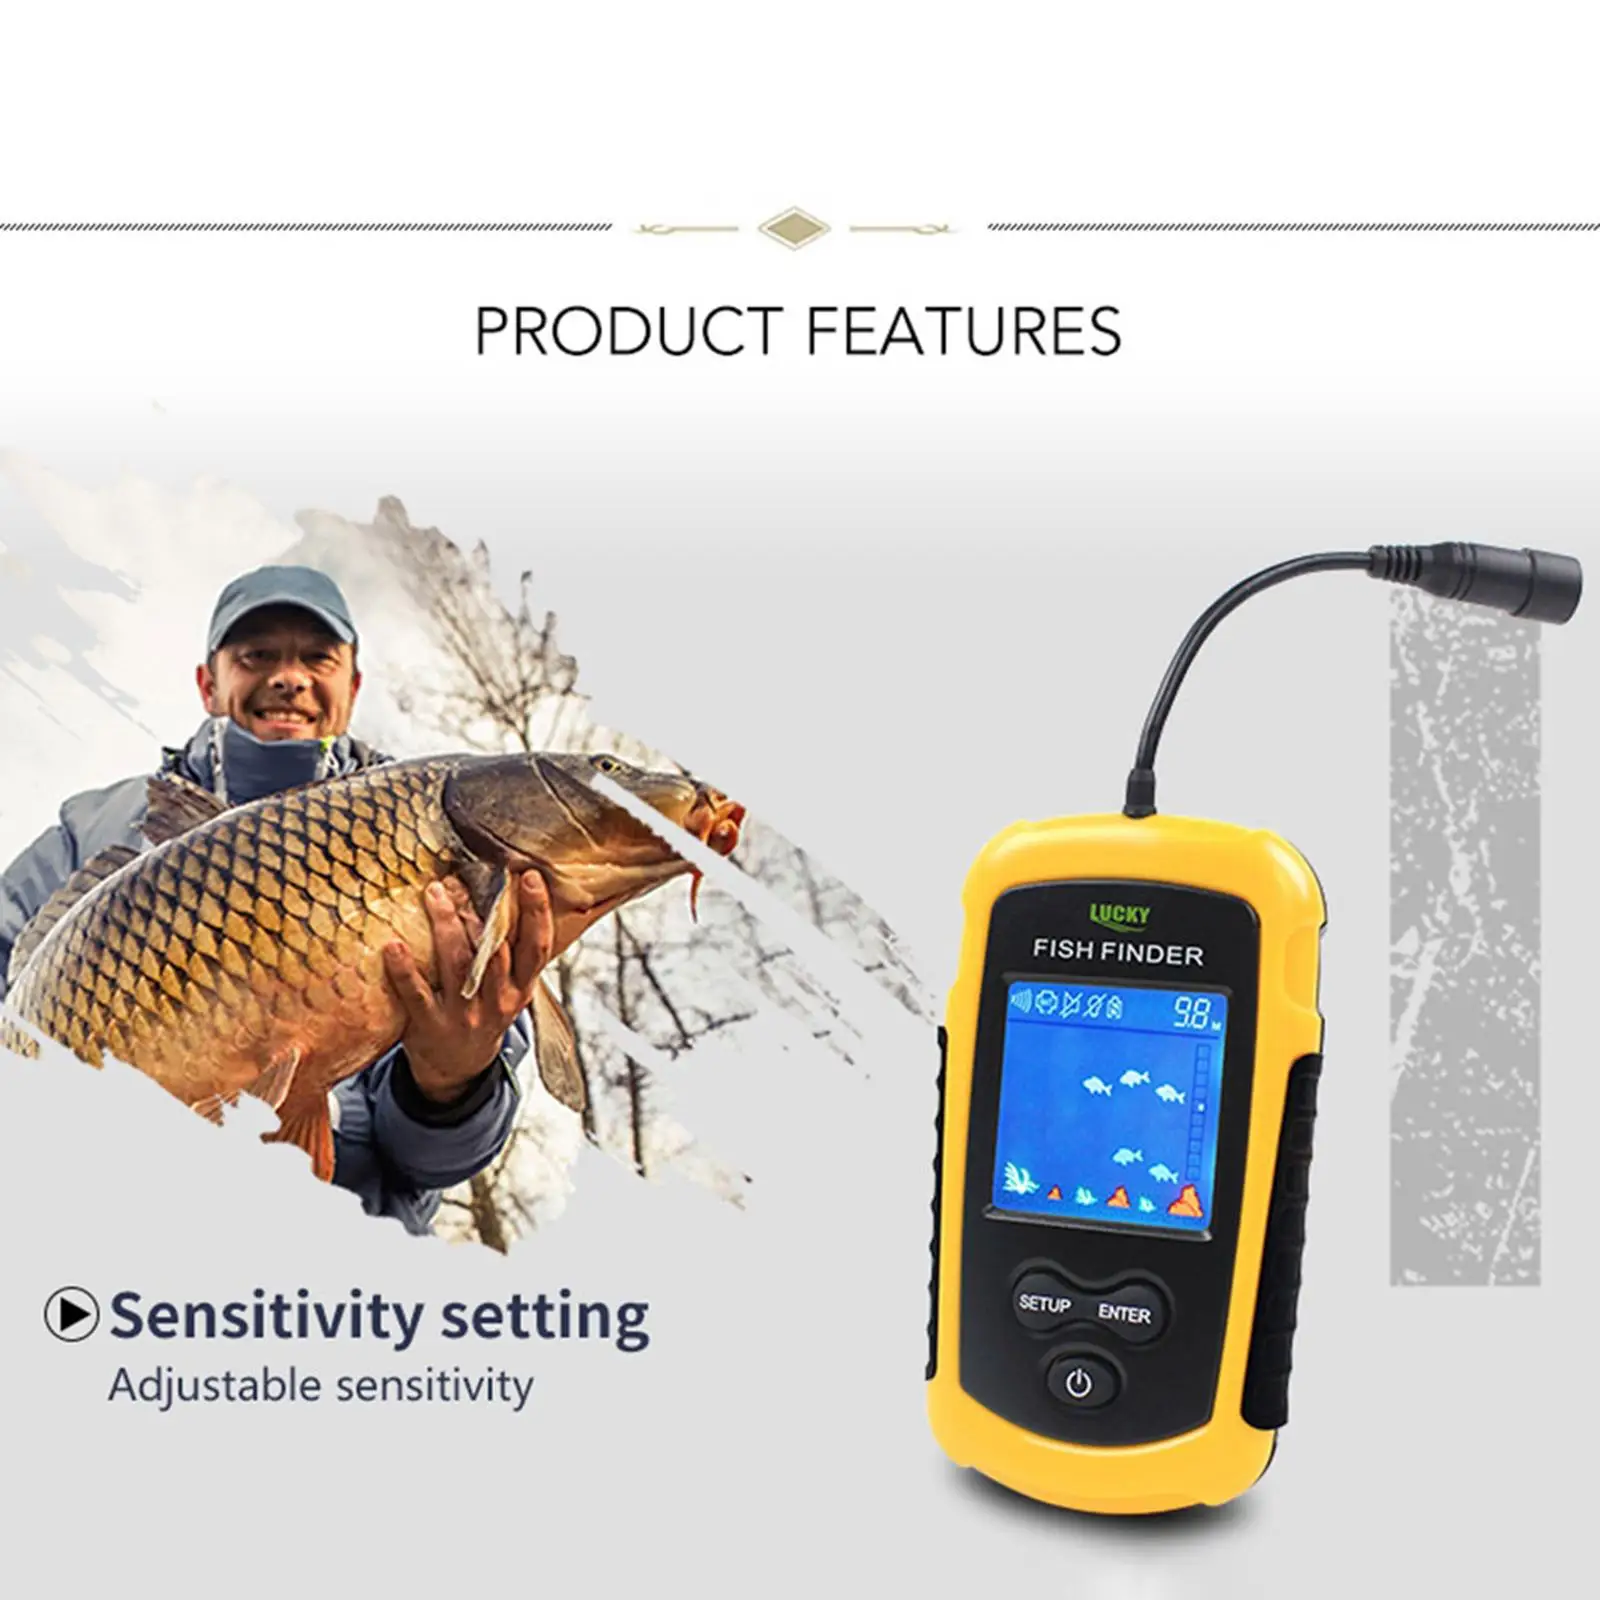 Handheld Fish Finder Portable, Fishing Kayak Fishfinder, Fish Depth Finder